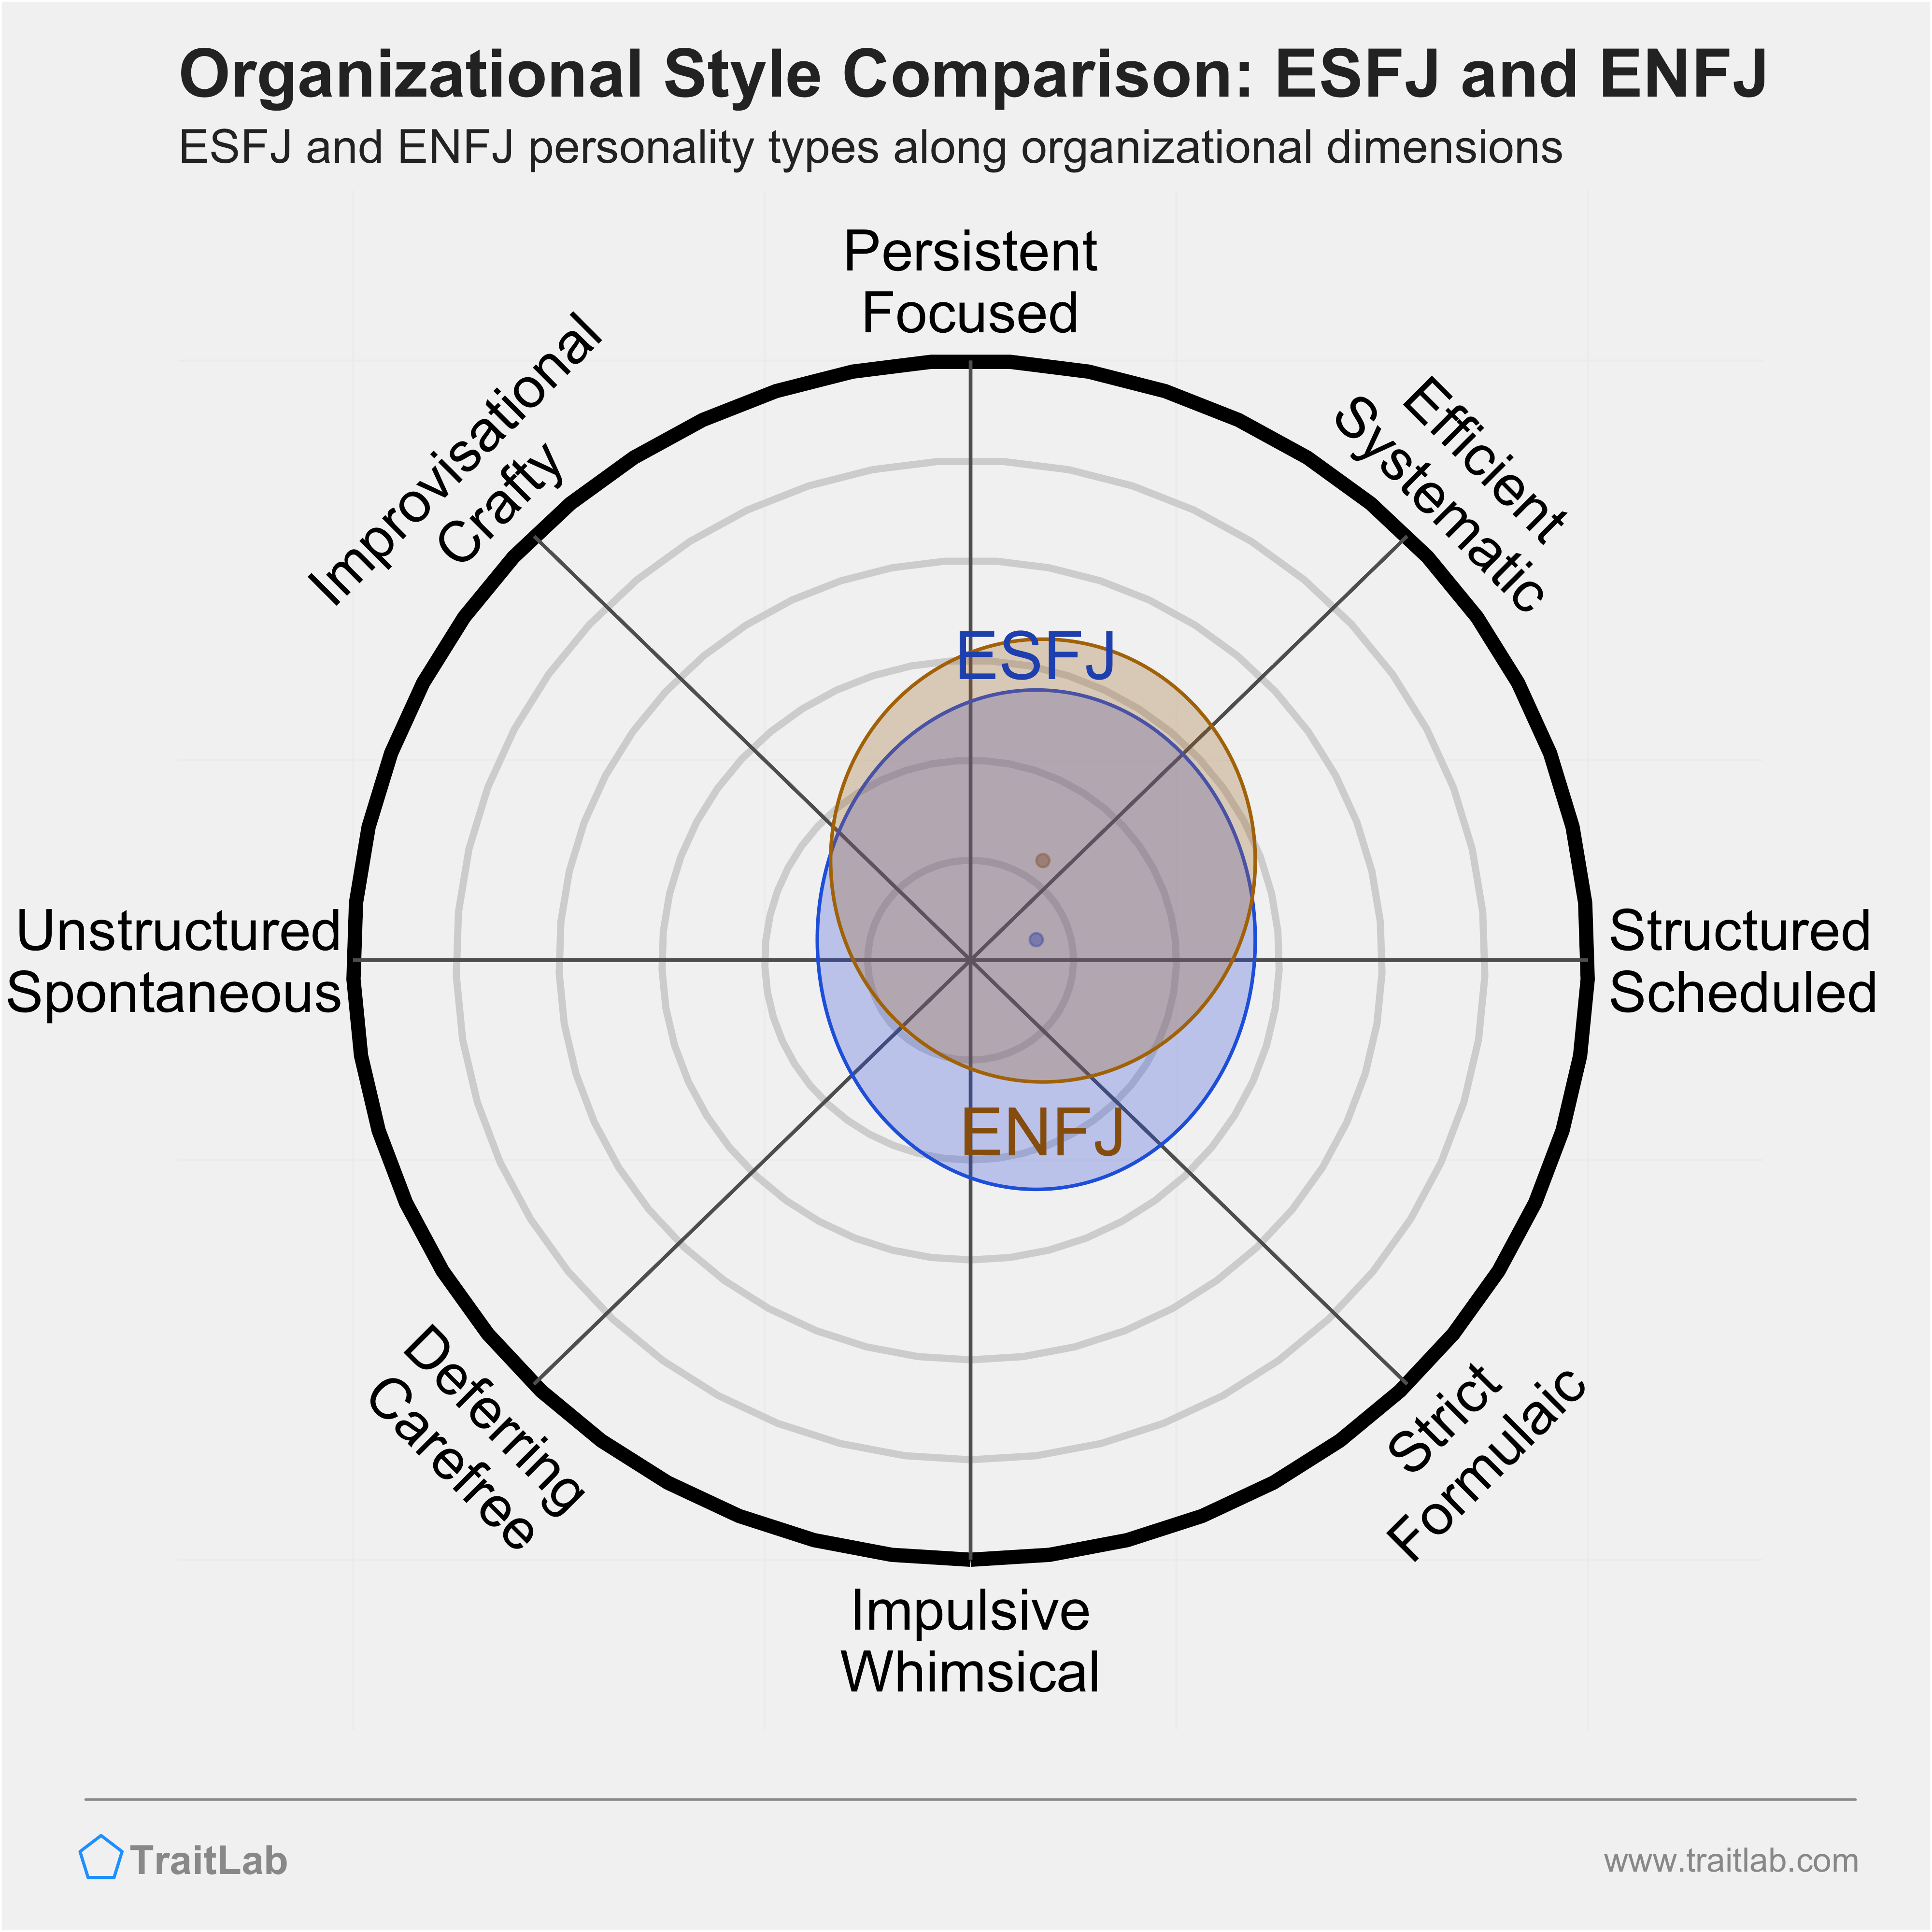 ESFJ and ENFJ comparison across organizational dimensions